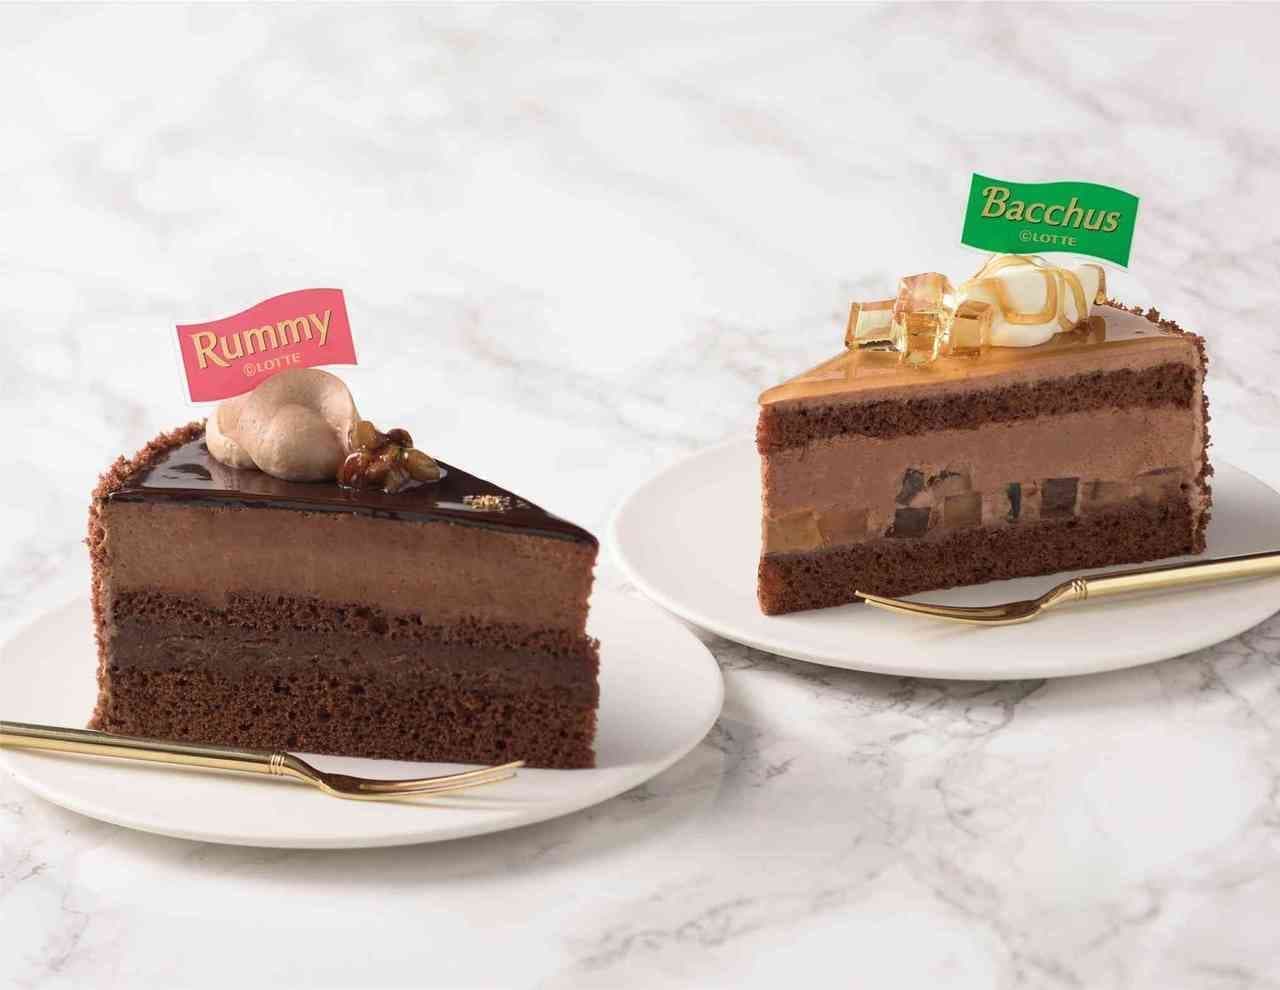 Ginza Kozy Corner "Rummy Chocolate Cake" and "Bacchus Chocolate Cake